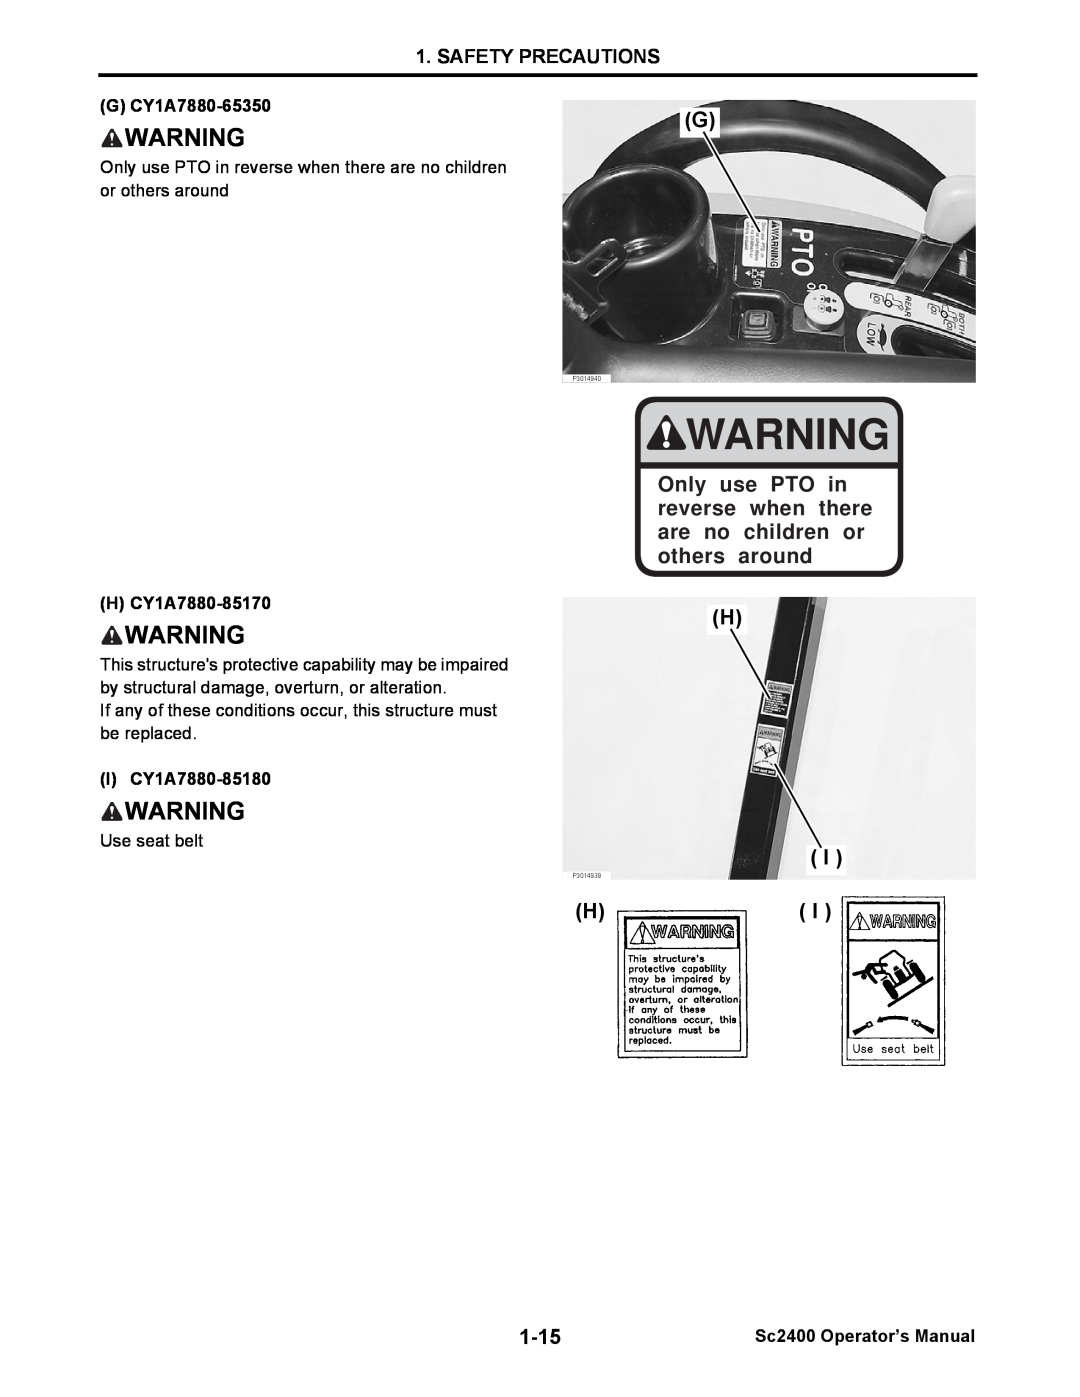 Cub Cadet SC2400 manual Safety Precautions, GCY1A7880-65350, HCY1A7880-85170, ICY1A7880-85180, Sc2400 Operator’s Manual 